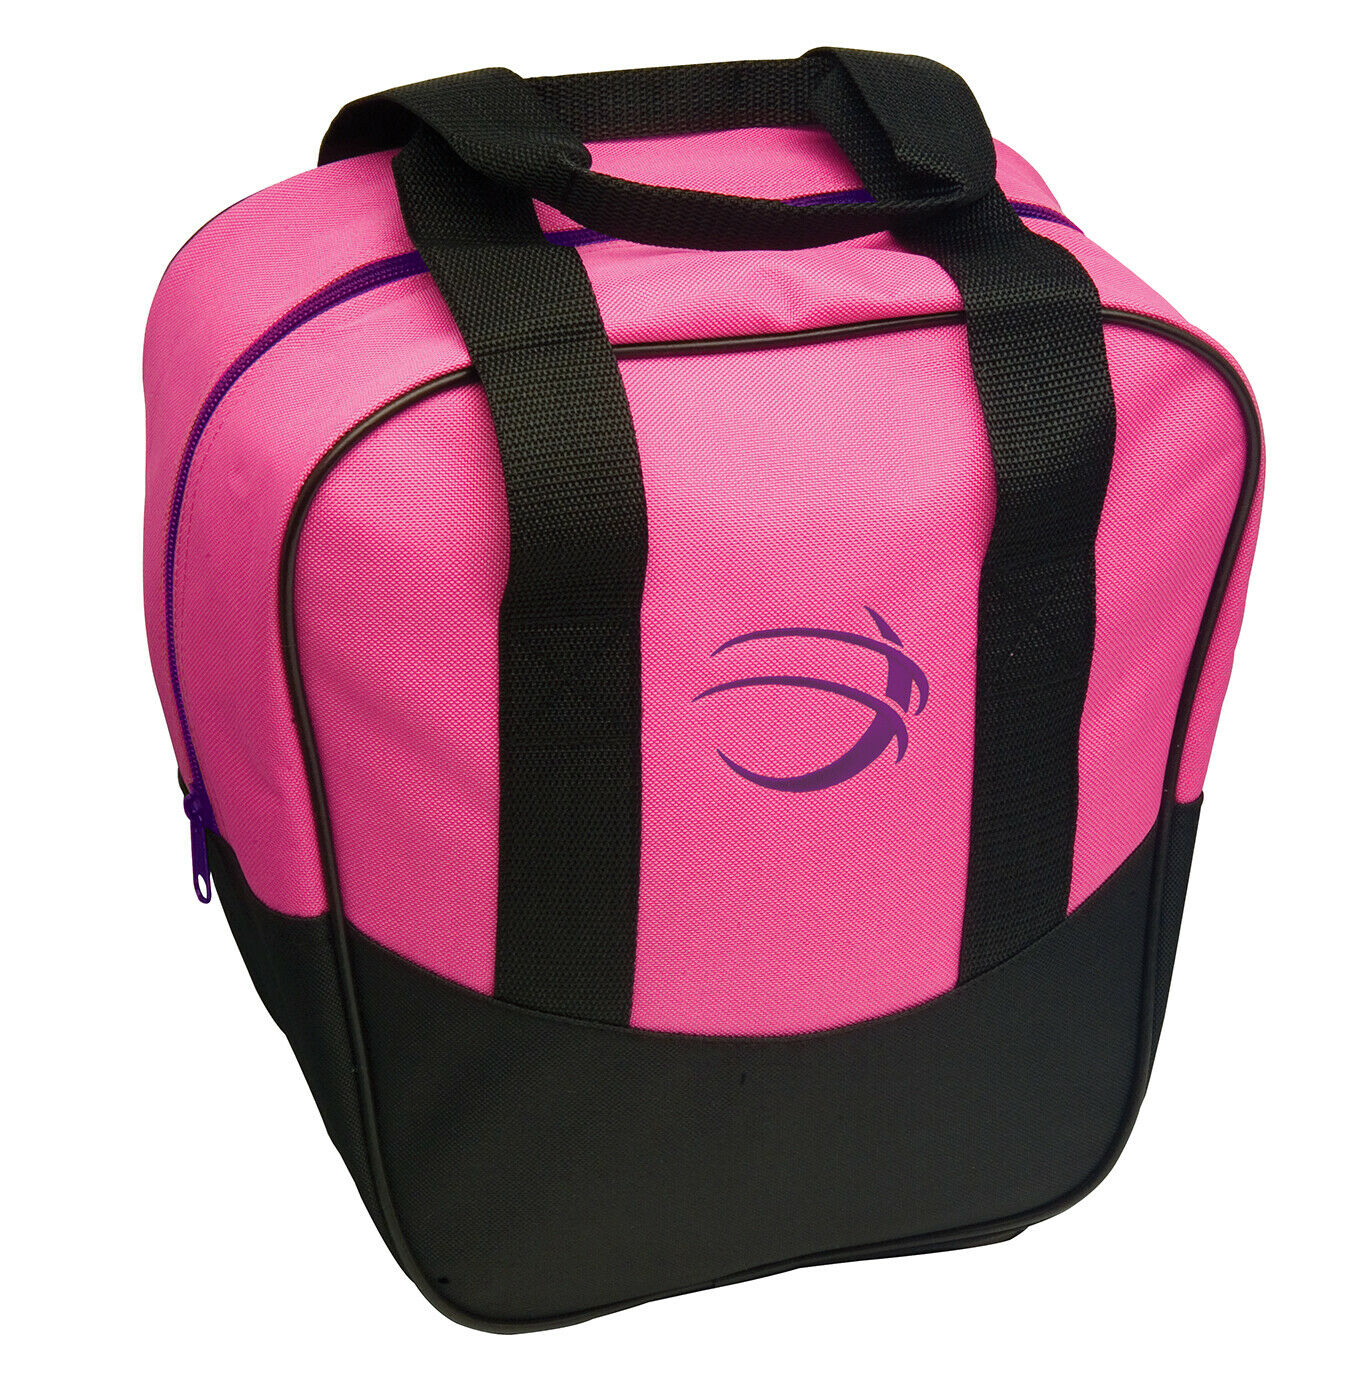 Bsi Nova Pink 1 Ball Bowling Bag